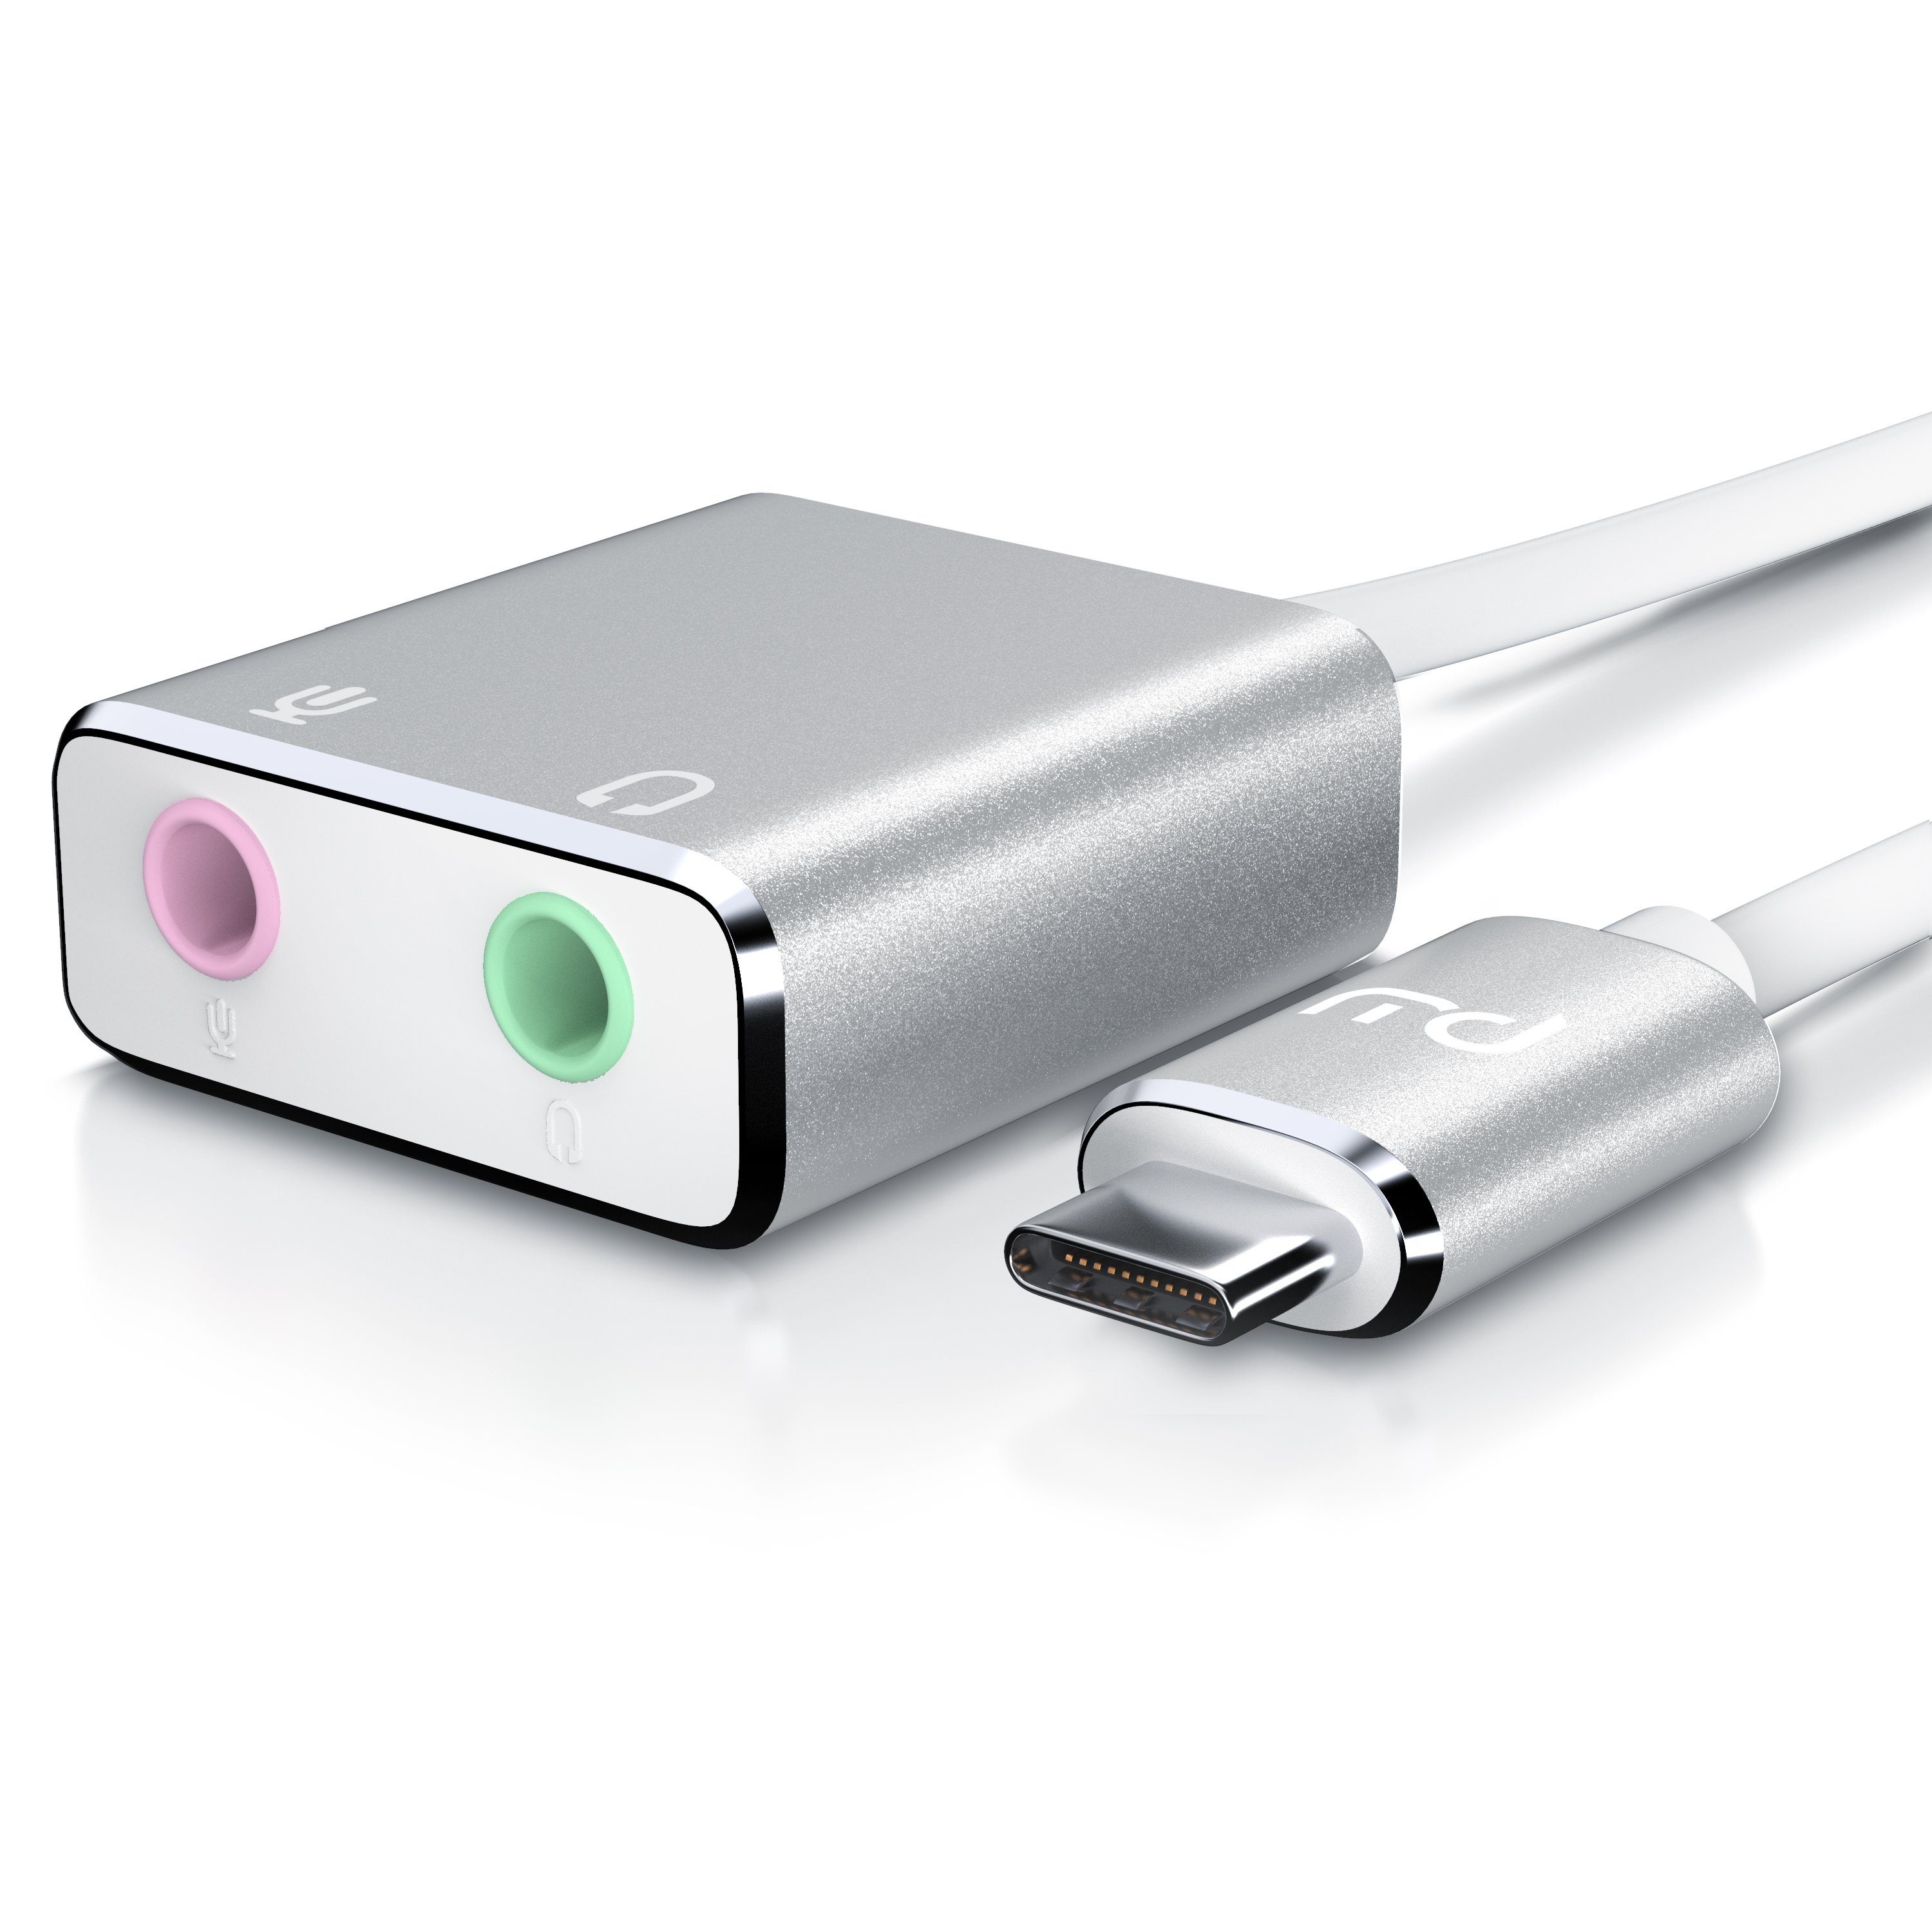 Primewire USB-Soundkarte Virtual 7.1 Surround, extern, Stereo Audio Adapter, Windows 10 & Mac OS X kompatibel